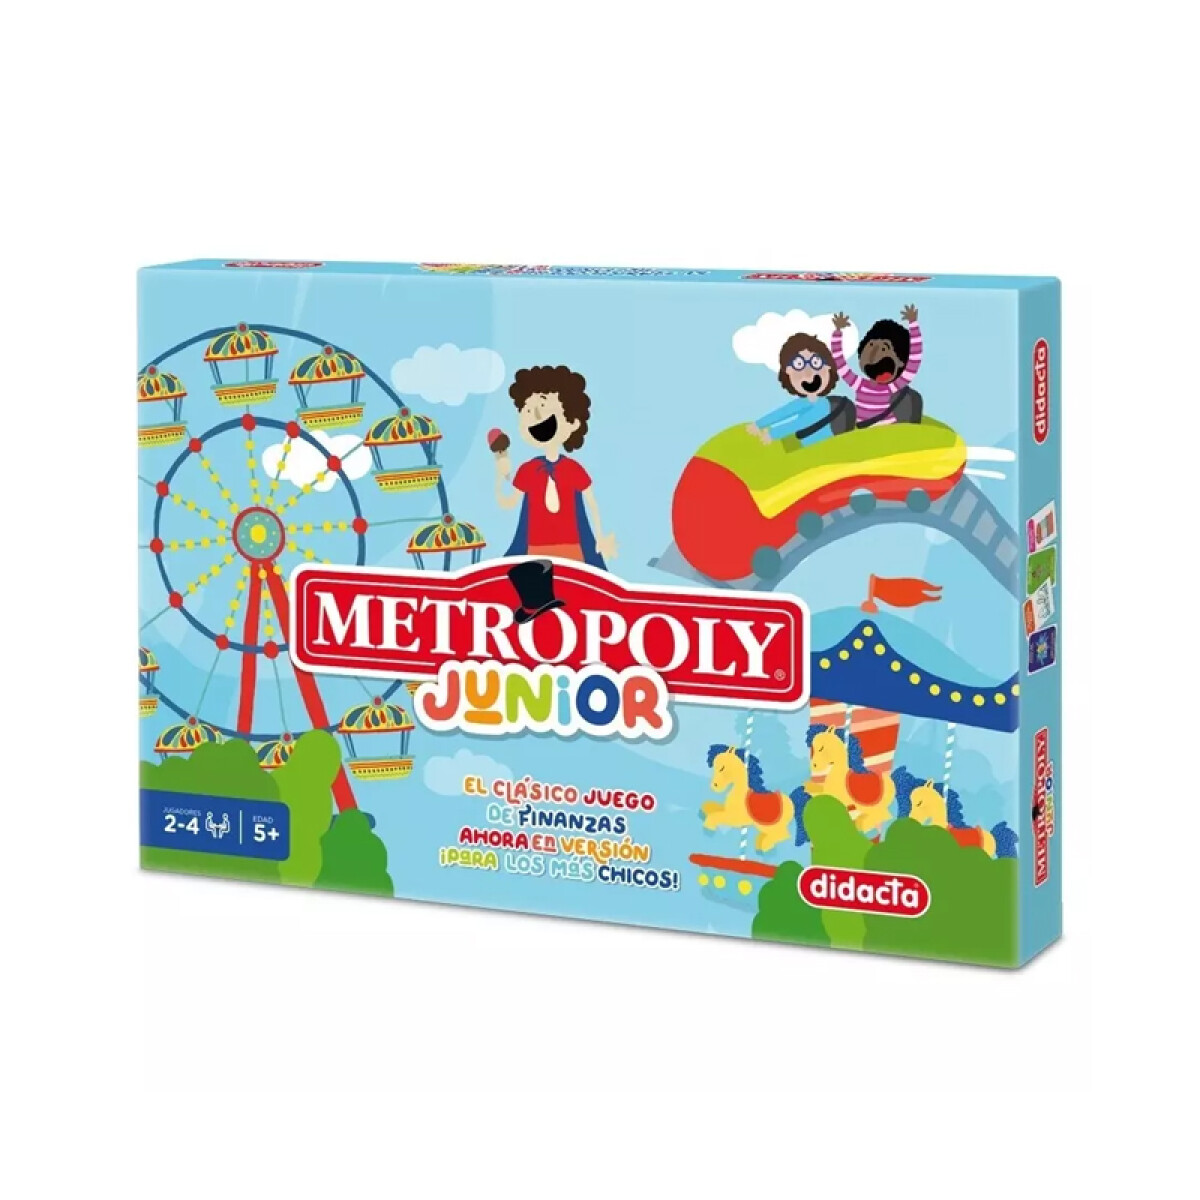 Metropoly Junior 